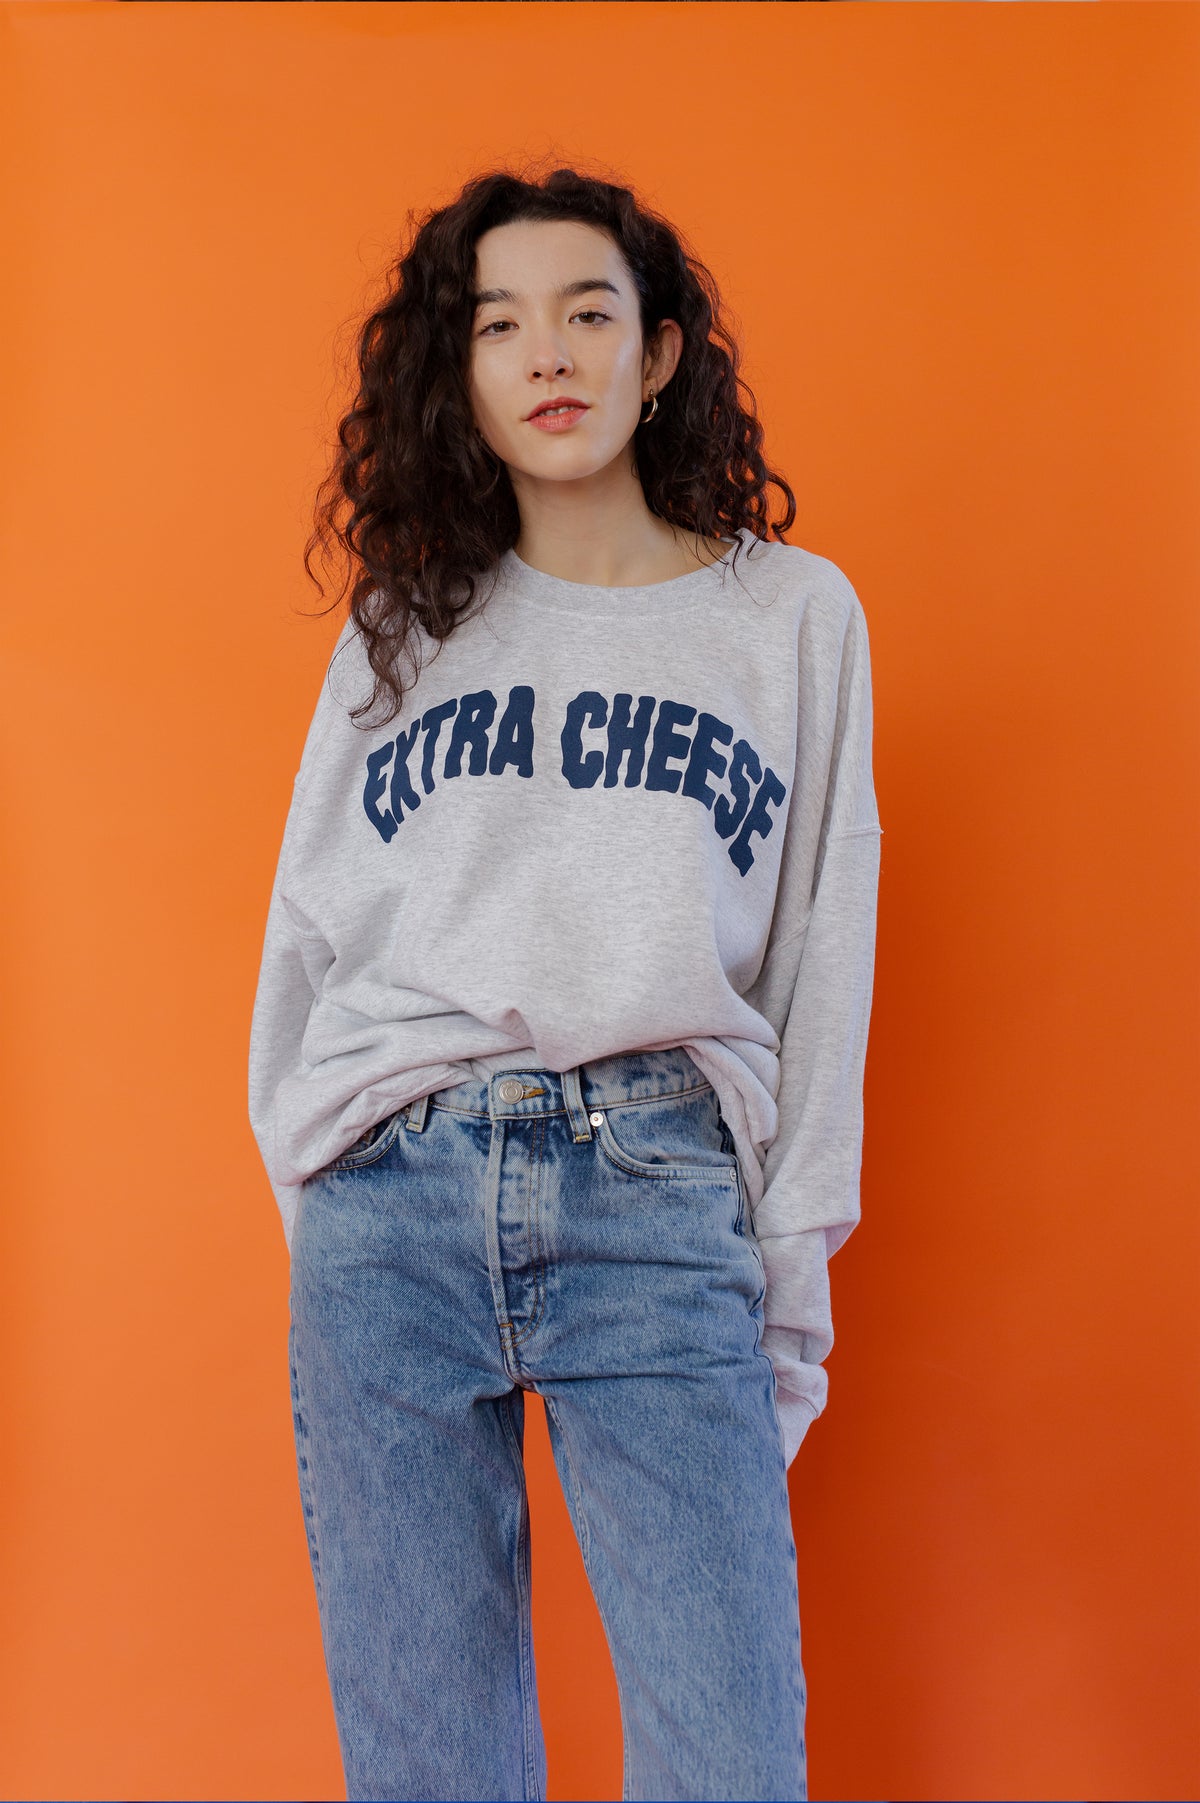 The Extra Cheese Oversized Sweatshirt